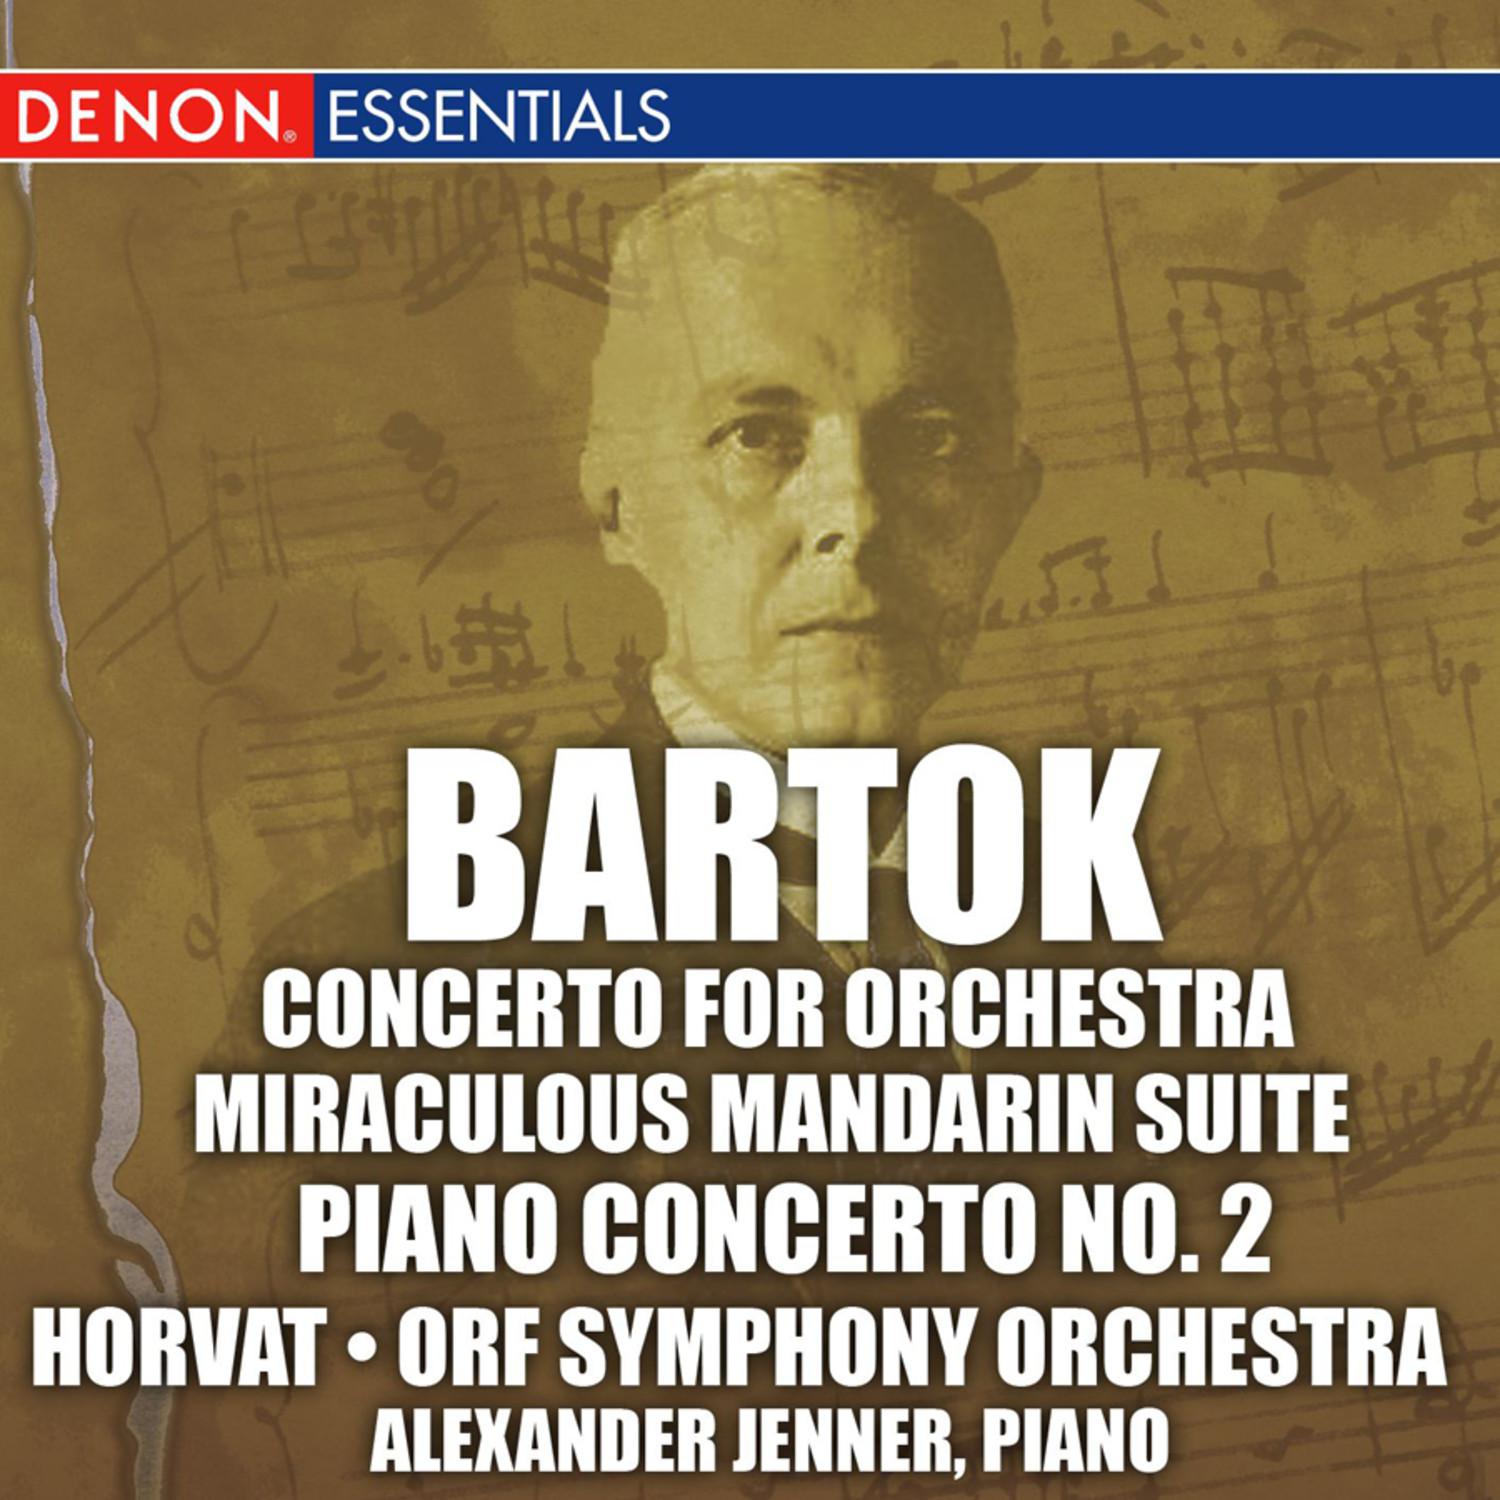 Bartok: Concerto for Orchestra, Miraculous Mandarin Suite, & 2nd Piano Concerto